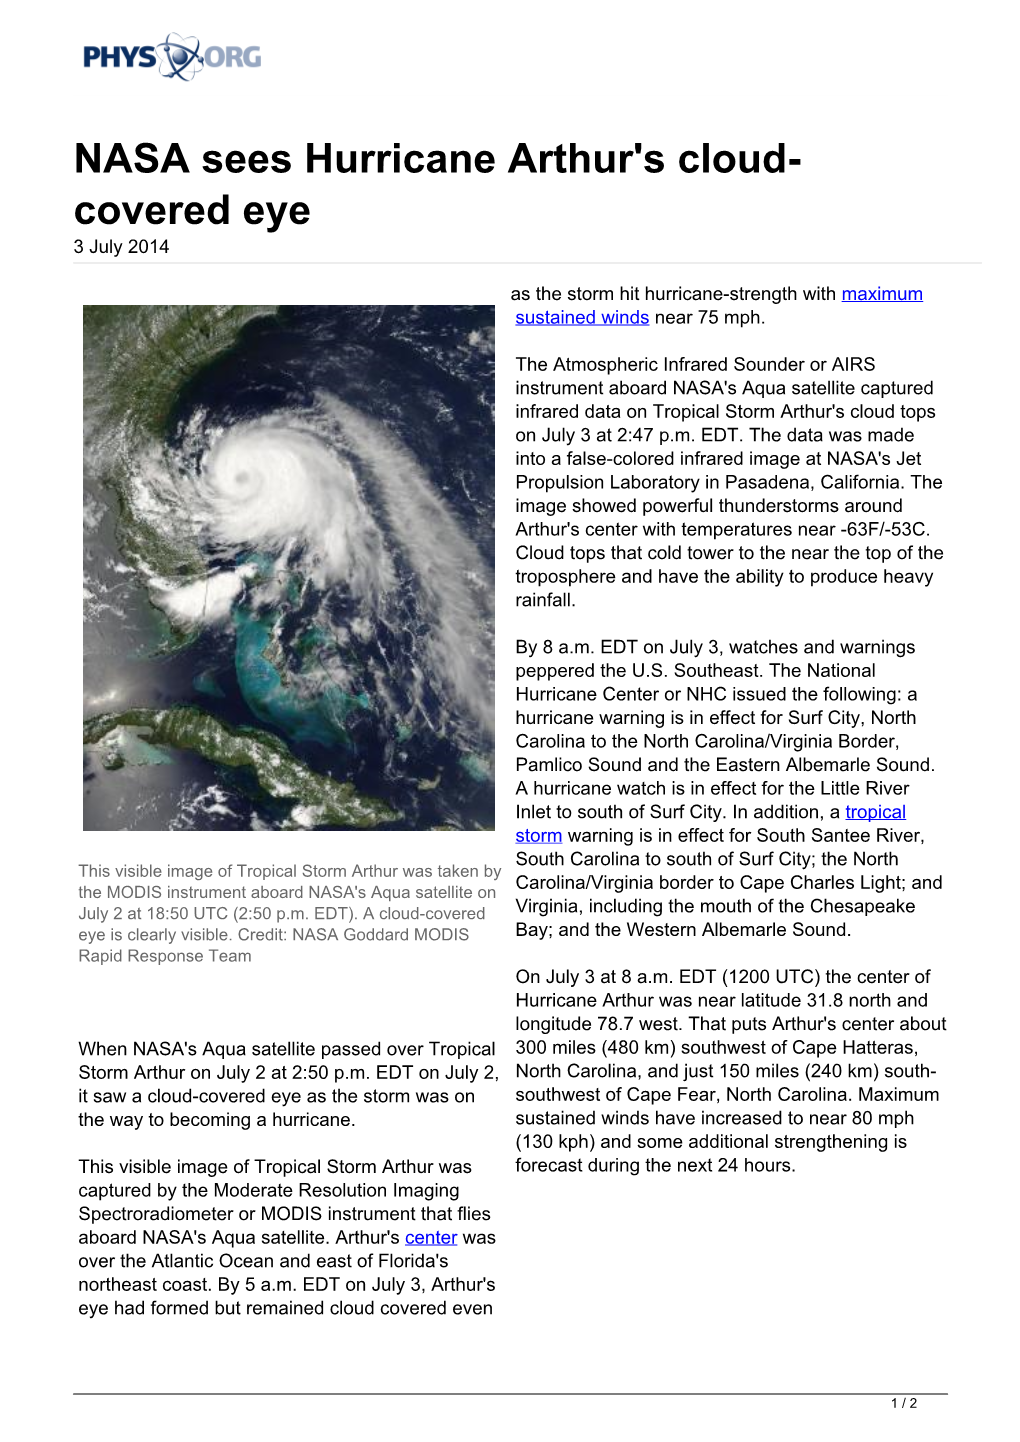 NASA Sees Hurricane Arthur's Cloud-Covered